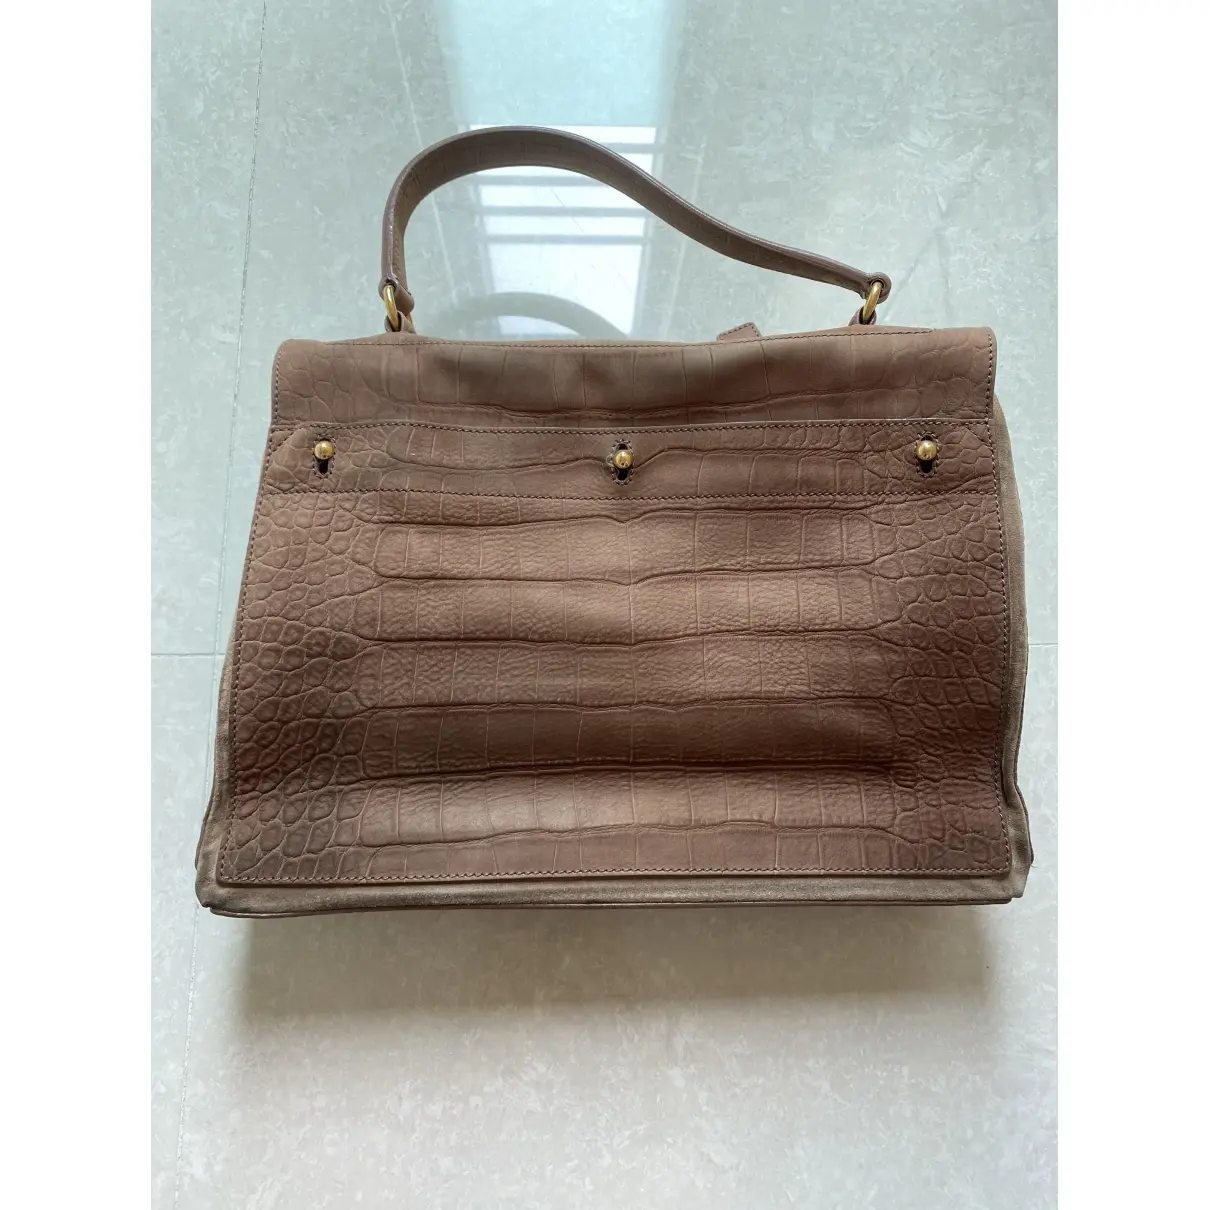 Buy Yves Saint Laurent Muse Two leather handbag online